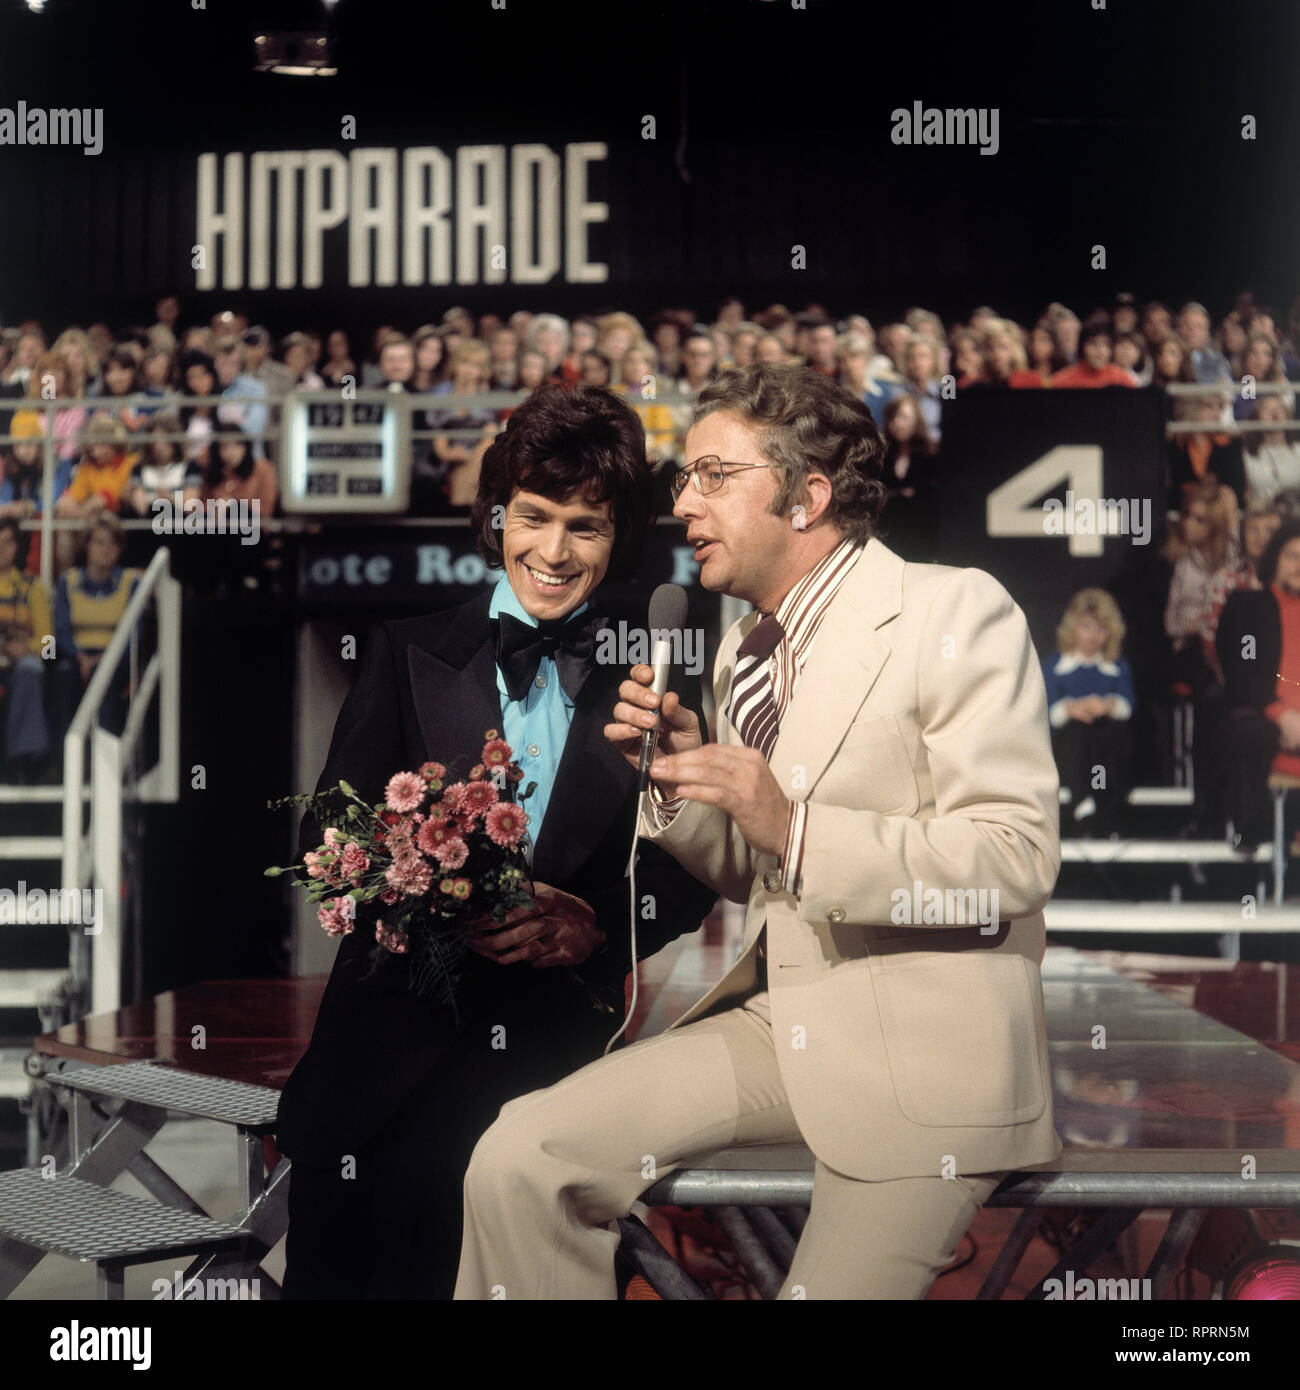 HITPARADE / FREDDY BRECK mit DIETER THOMAS HECK, 1973 Grimm598 Stock Photo